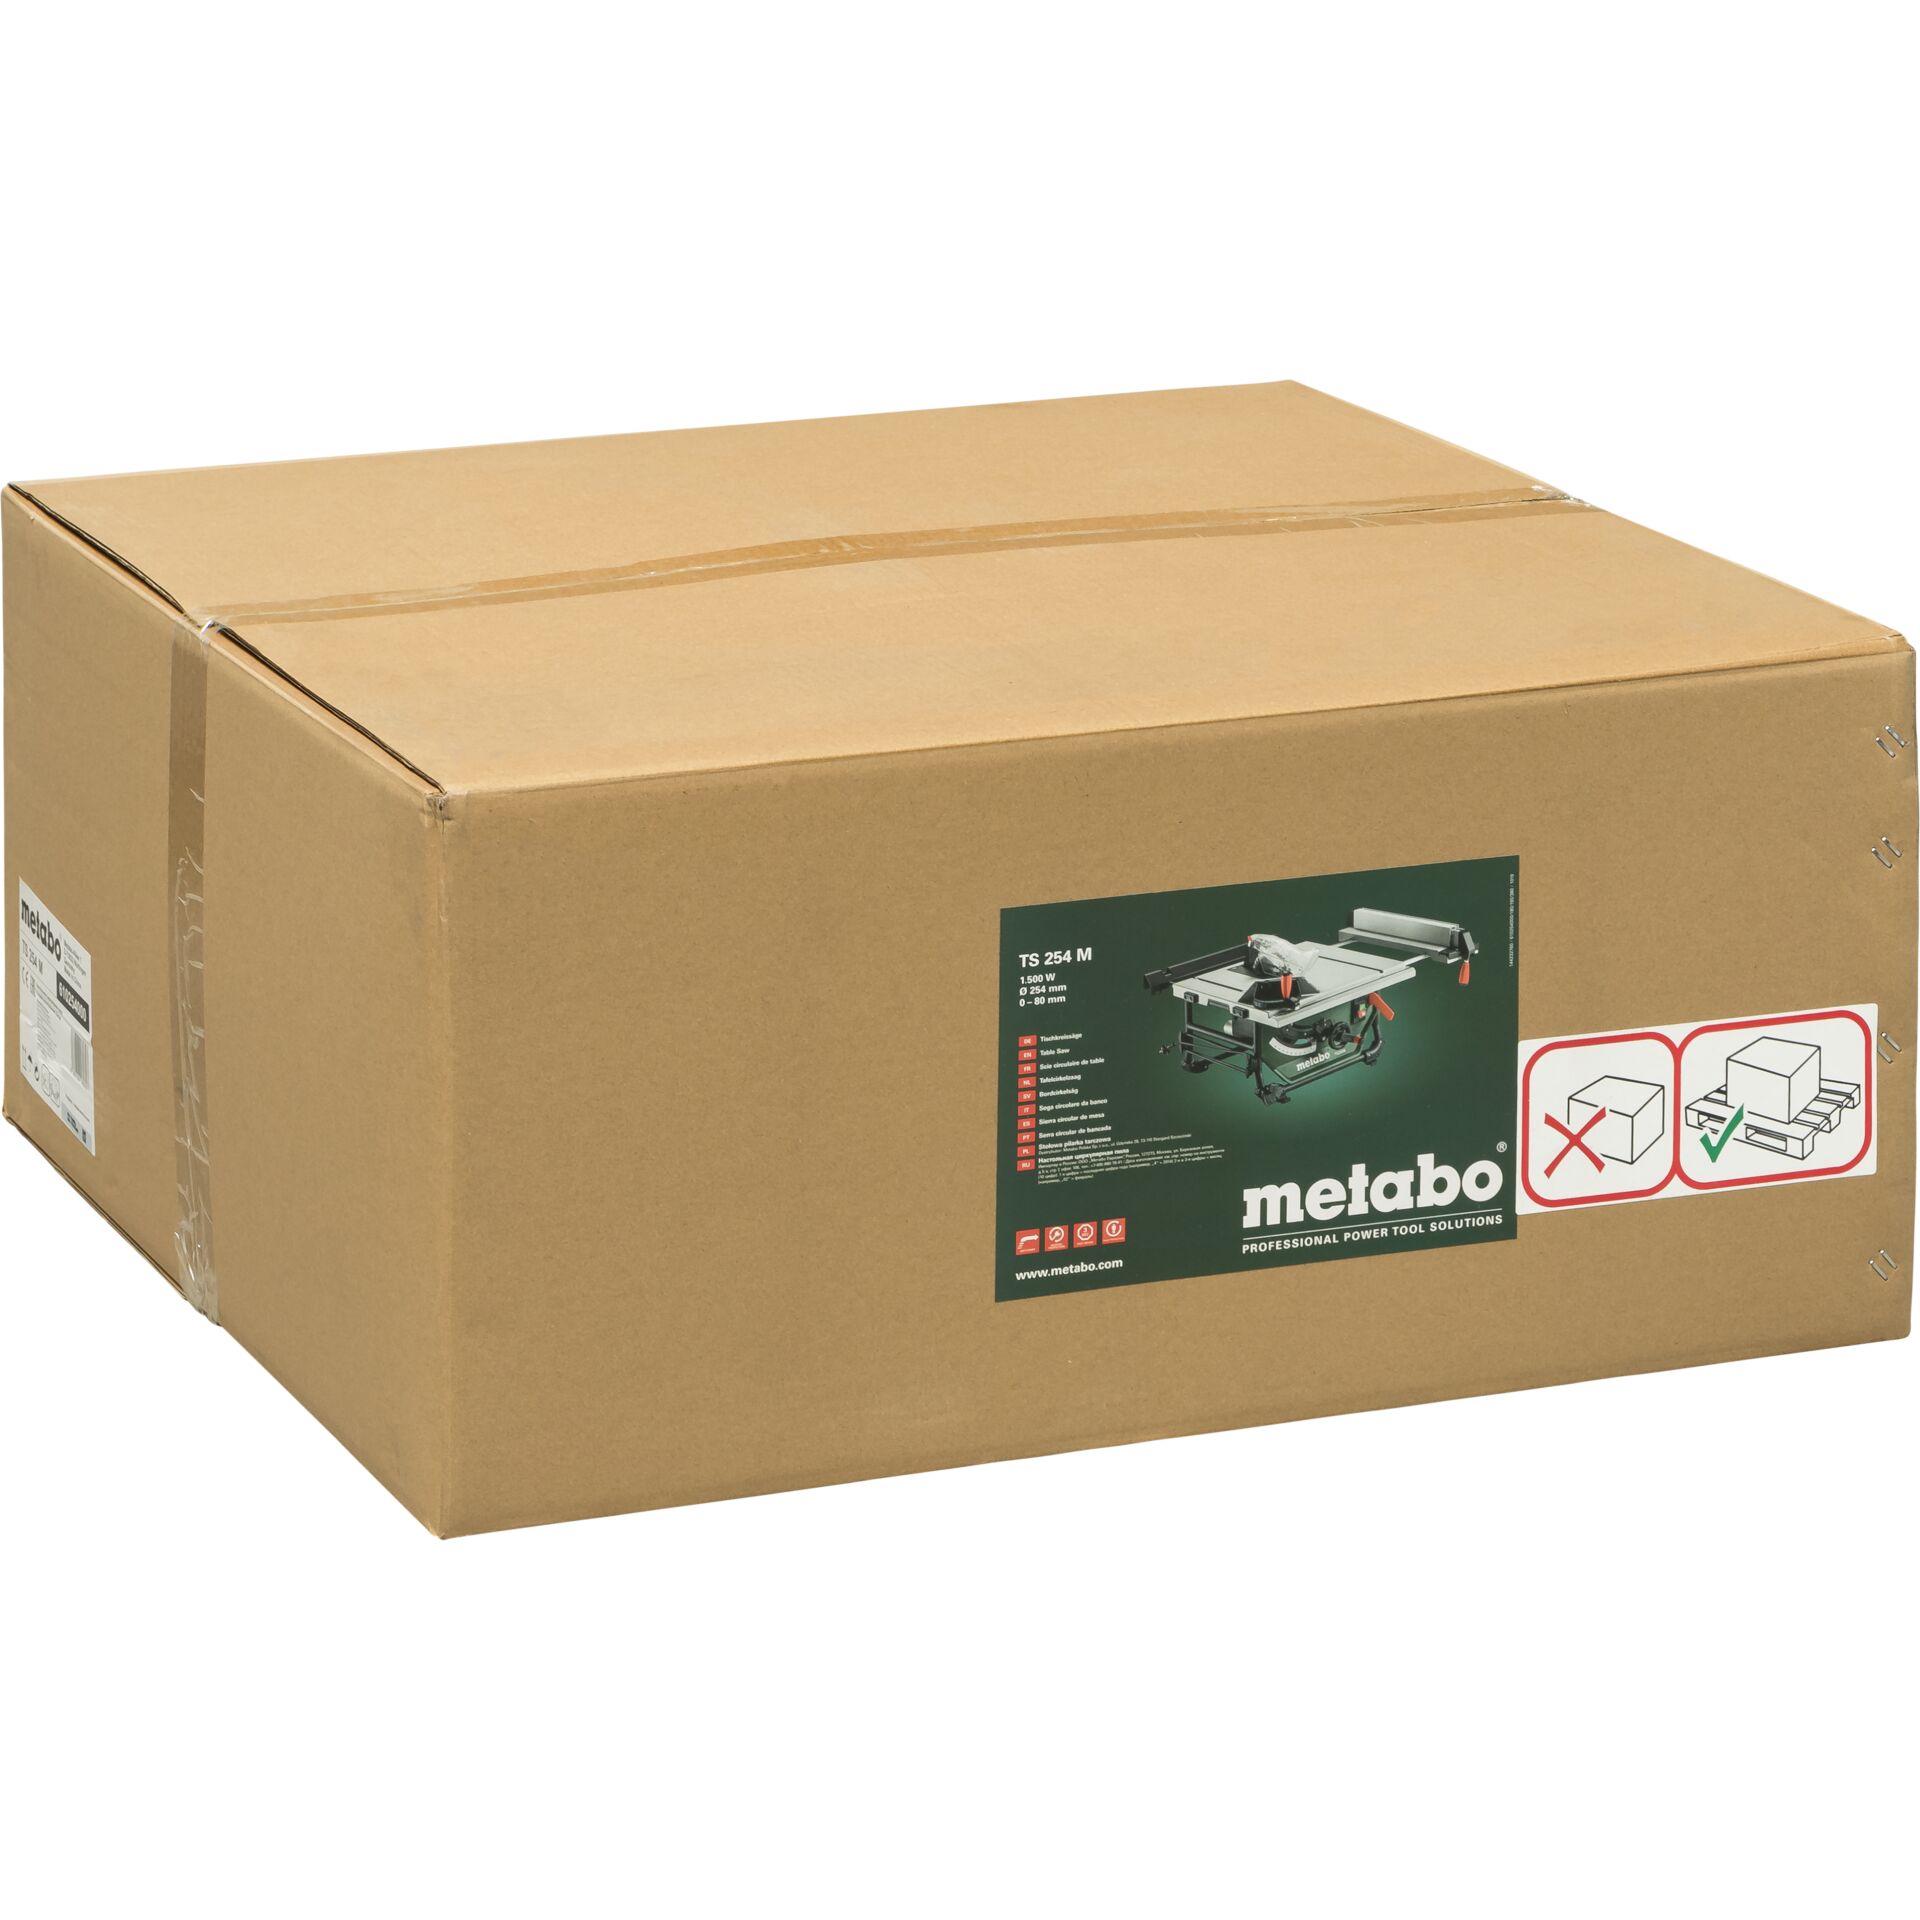 Metabo TS 254 M 4200 RPM